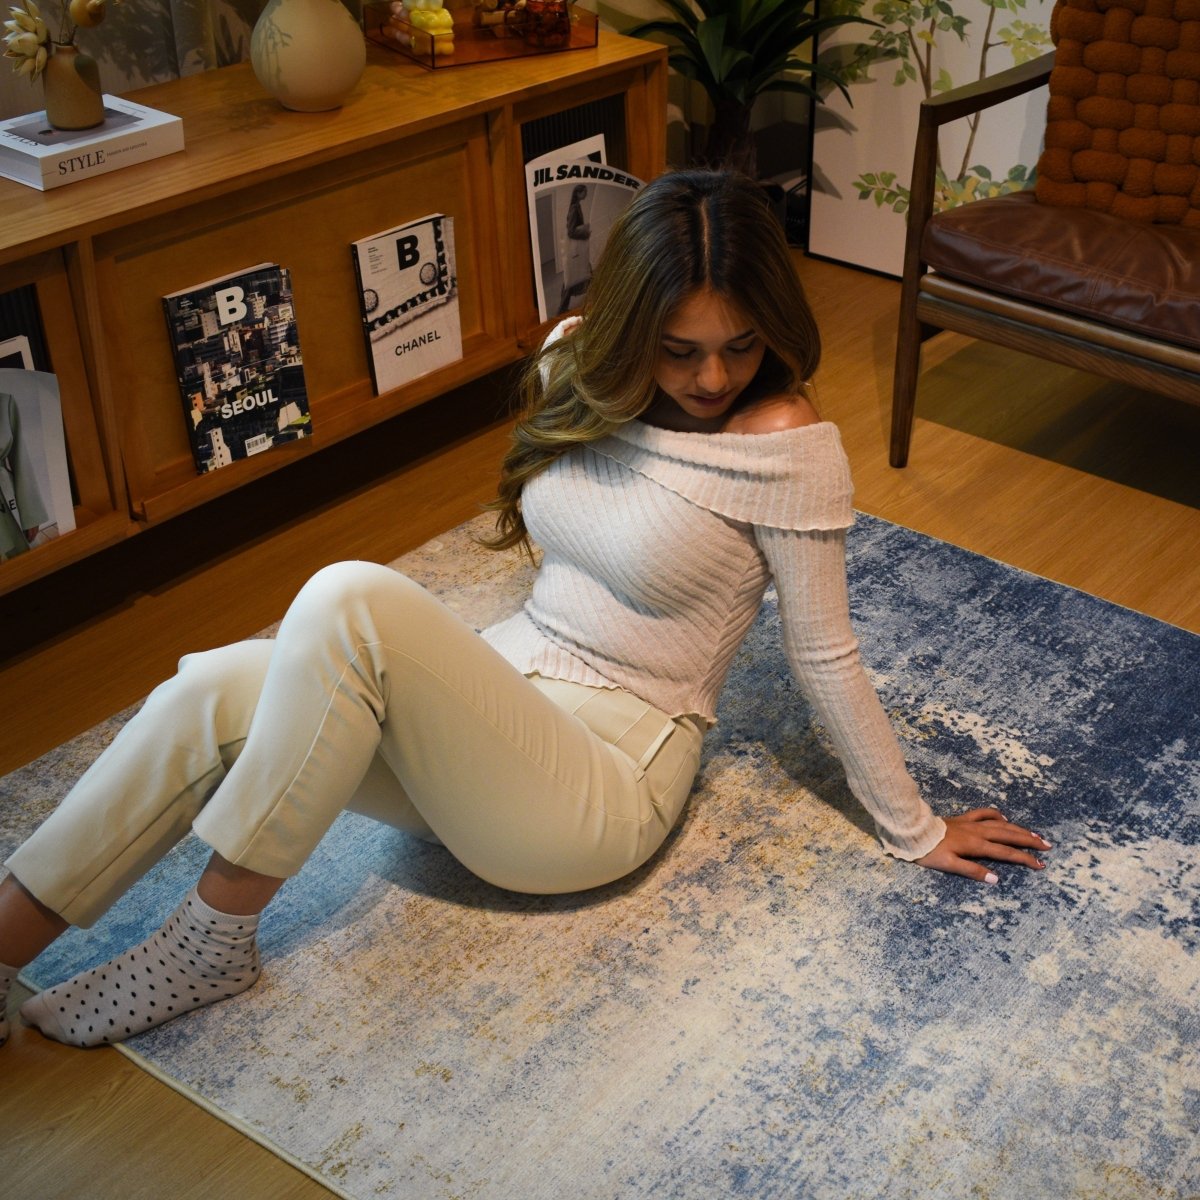 P-8877 Persian Carpet | Polyfibre Cashmere Series - The Carpetier™